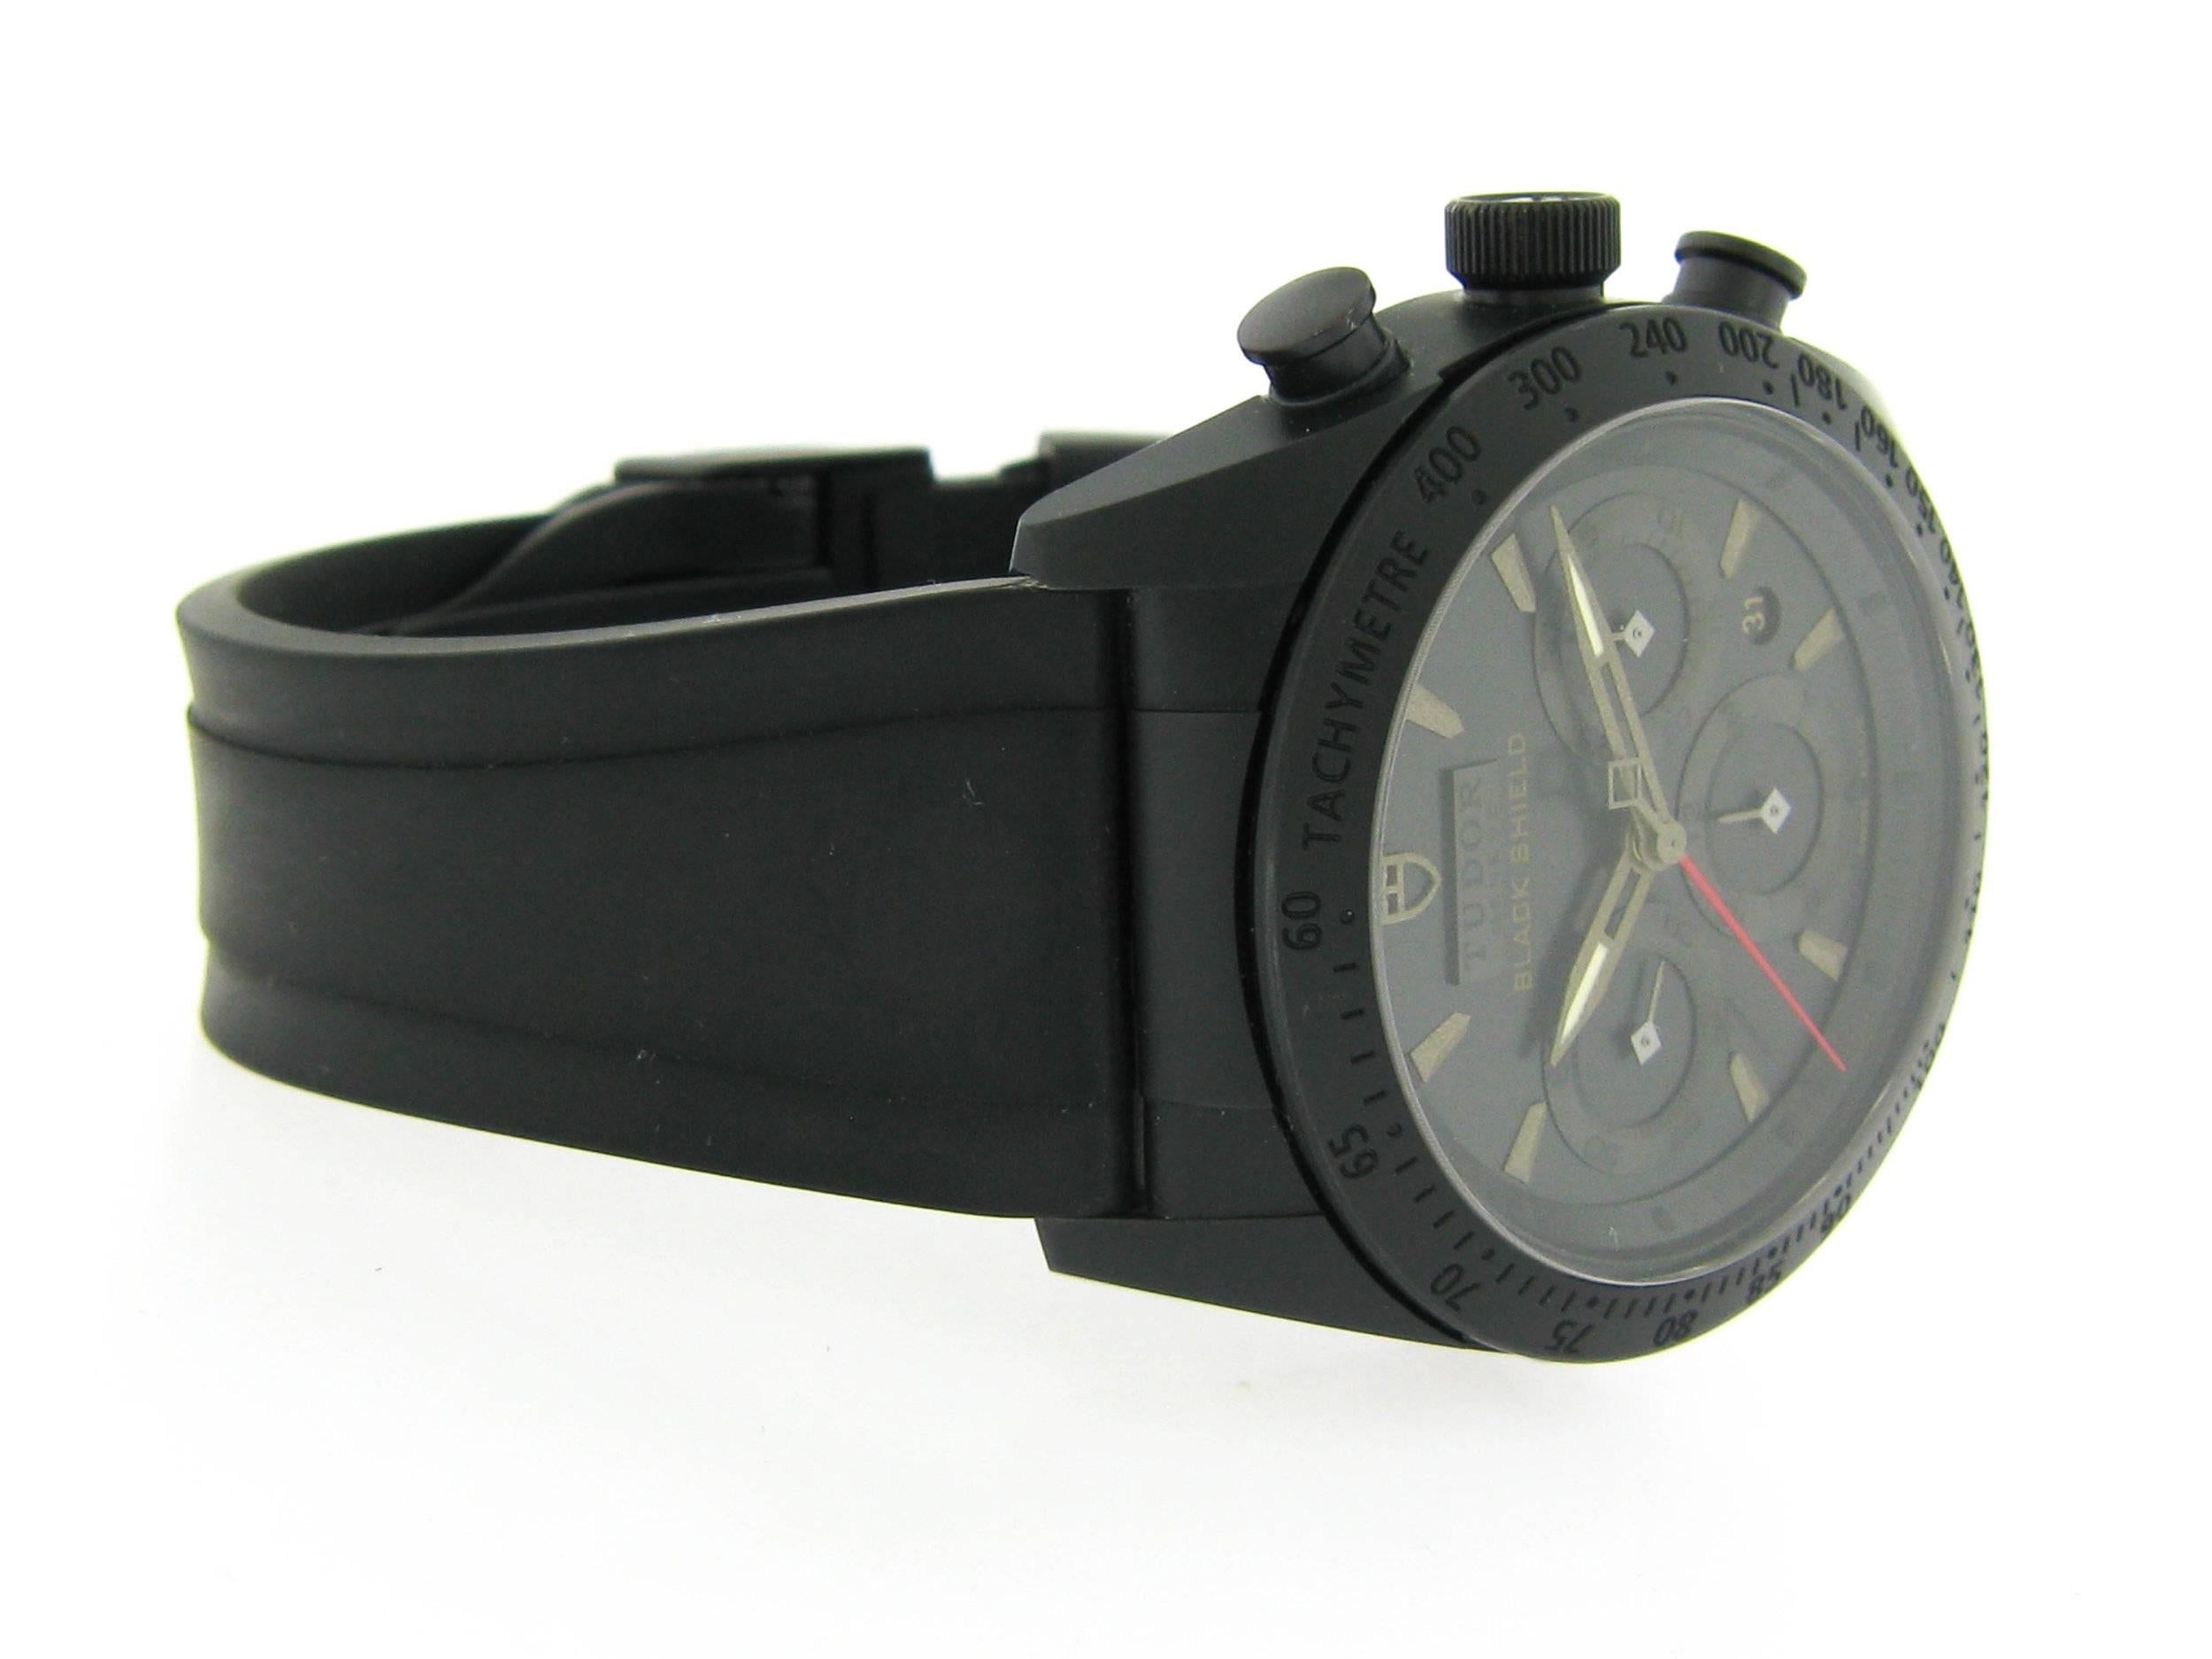 Modern Tudor Ceramic Fastrider Black Shield Chronograph Self Winding Wristwatch